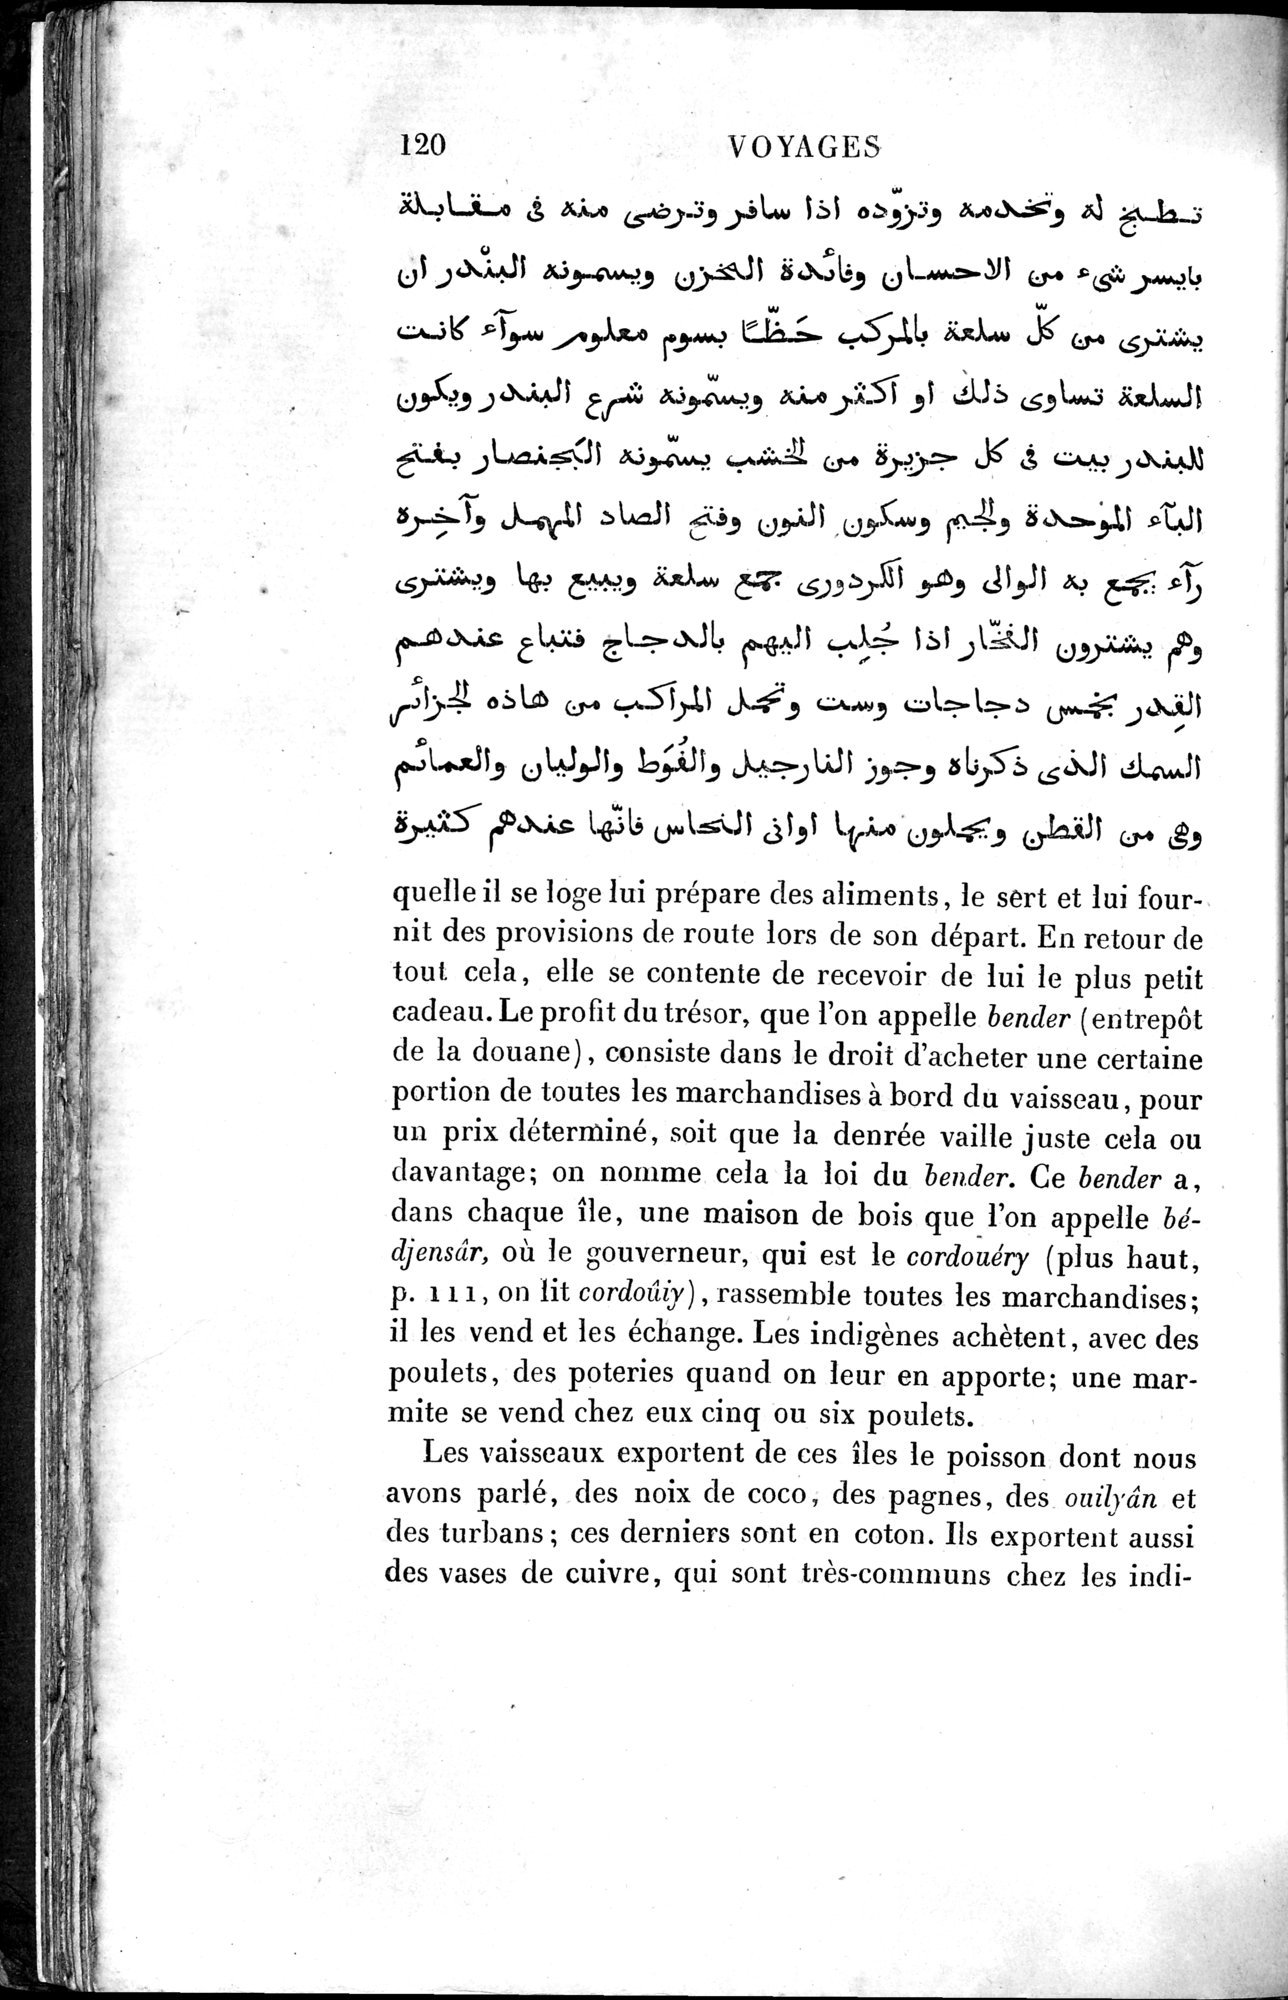 Voyages d'Ibn Batoutah : vol.4 / 132 ページ（白黒高解像度画像）